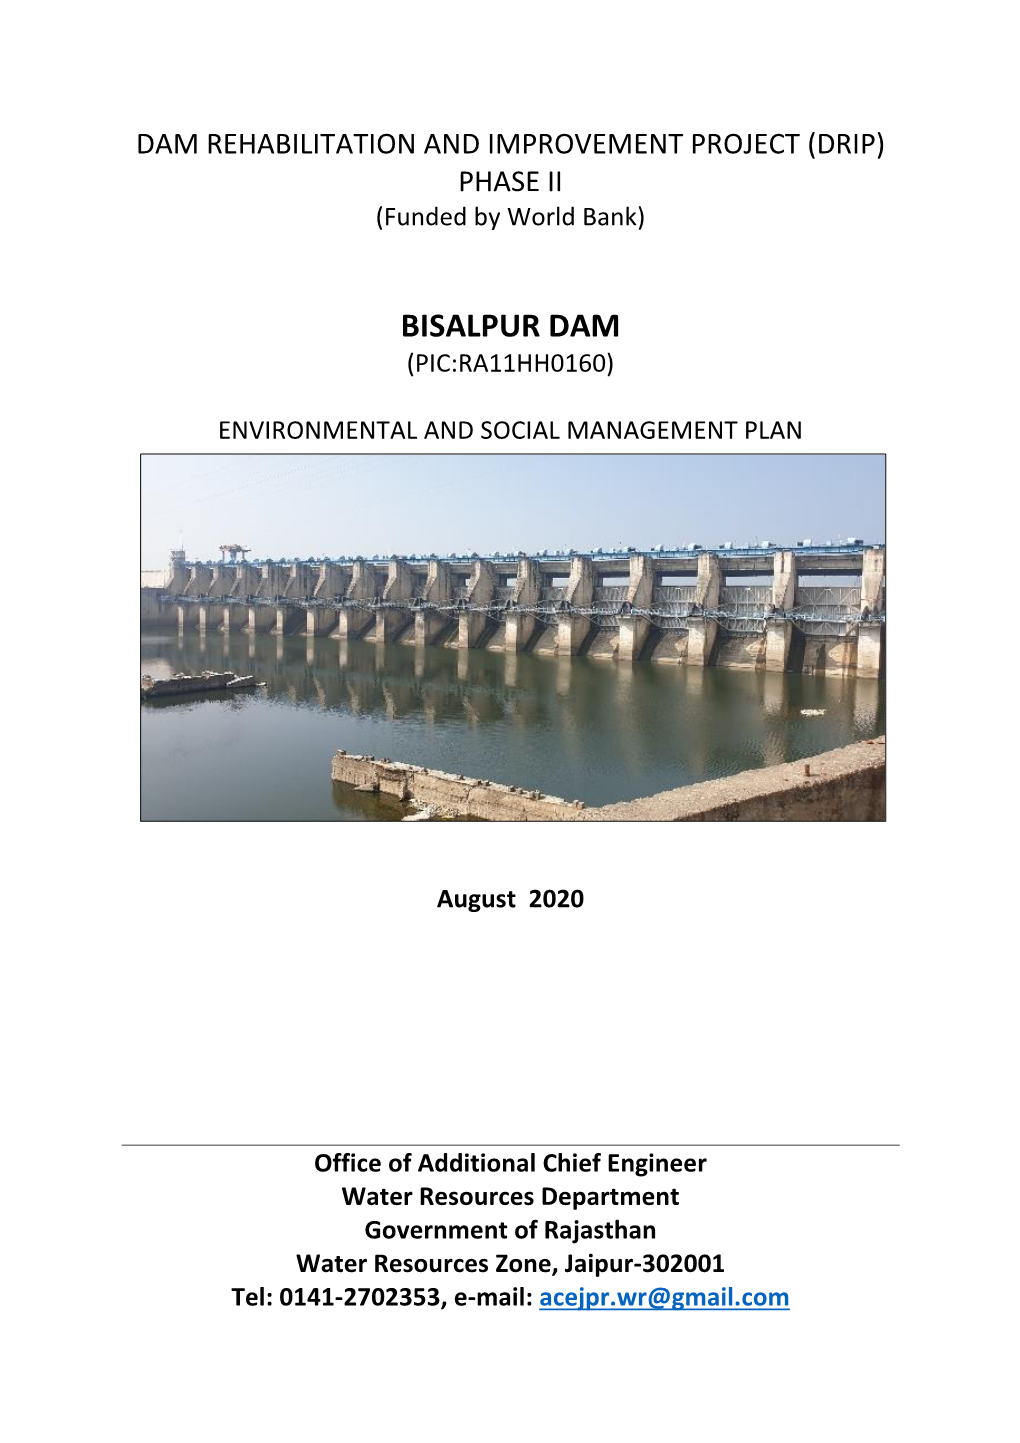 Bisalpur Dam (Pic:Ra11hh0160)